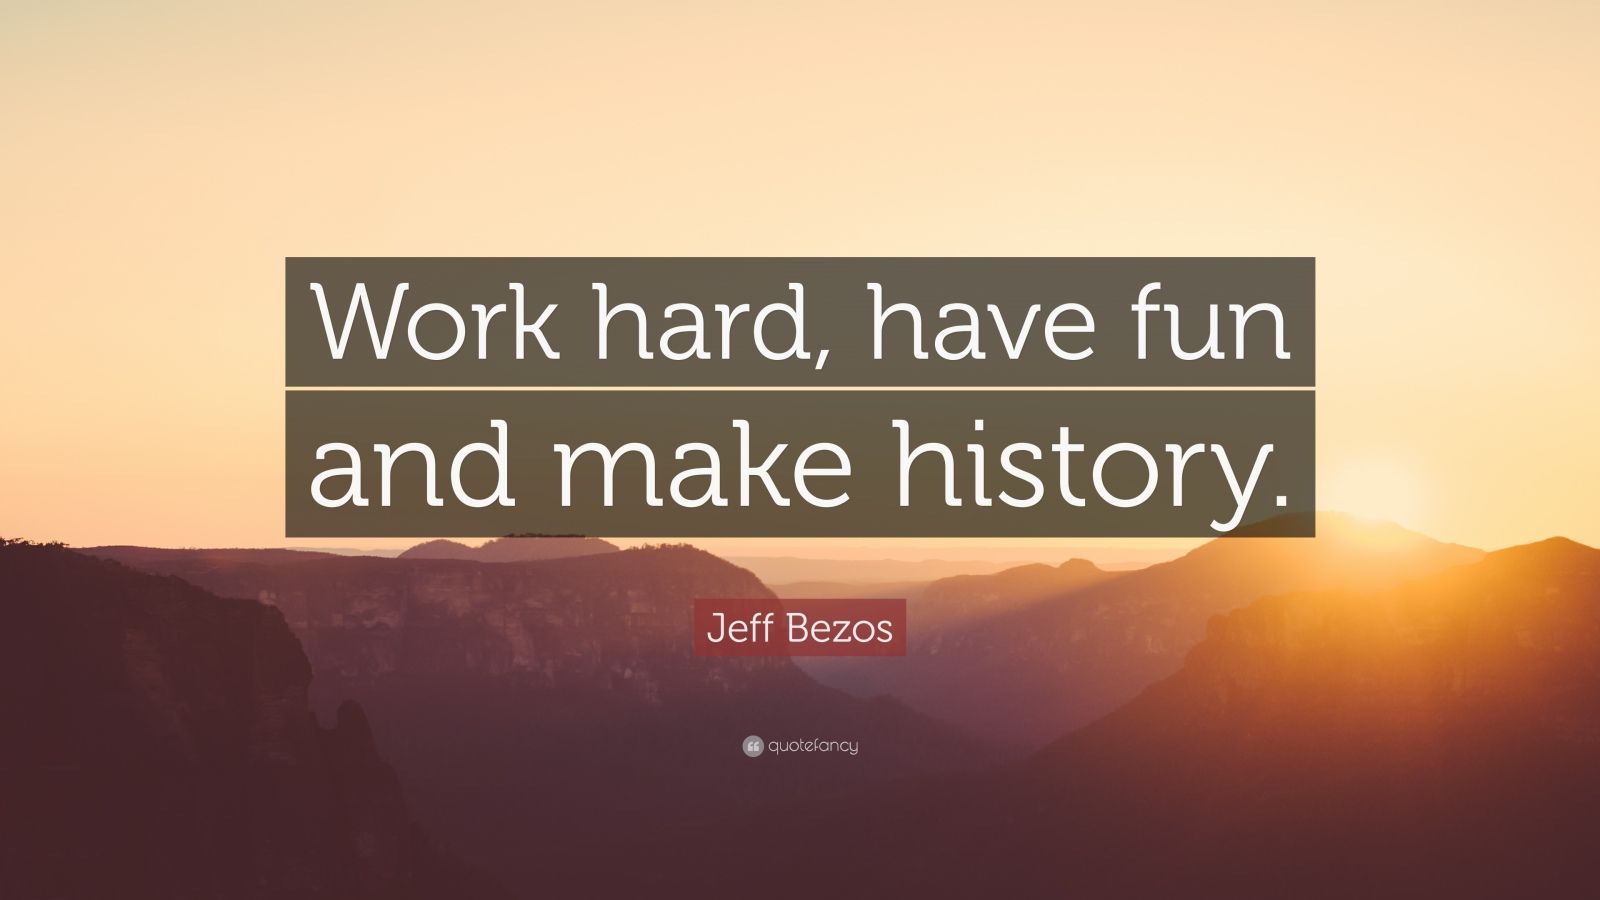 Jeff Bezos Quote: “Work hard, have fun and make history.” (30 ...